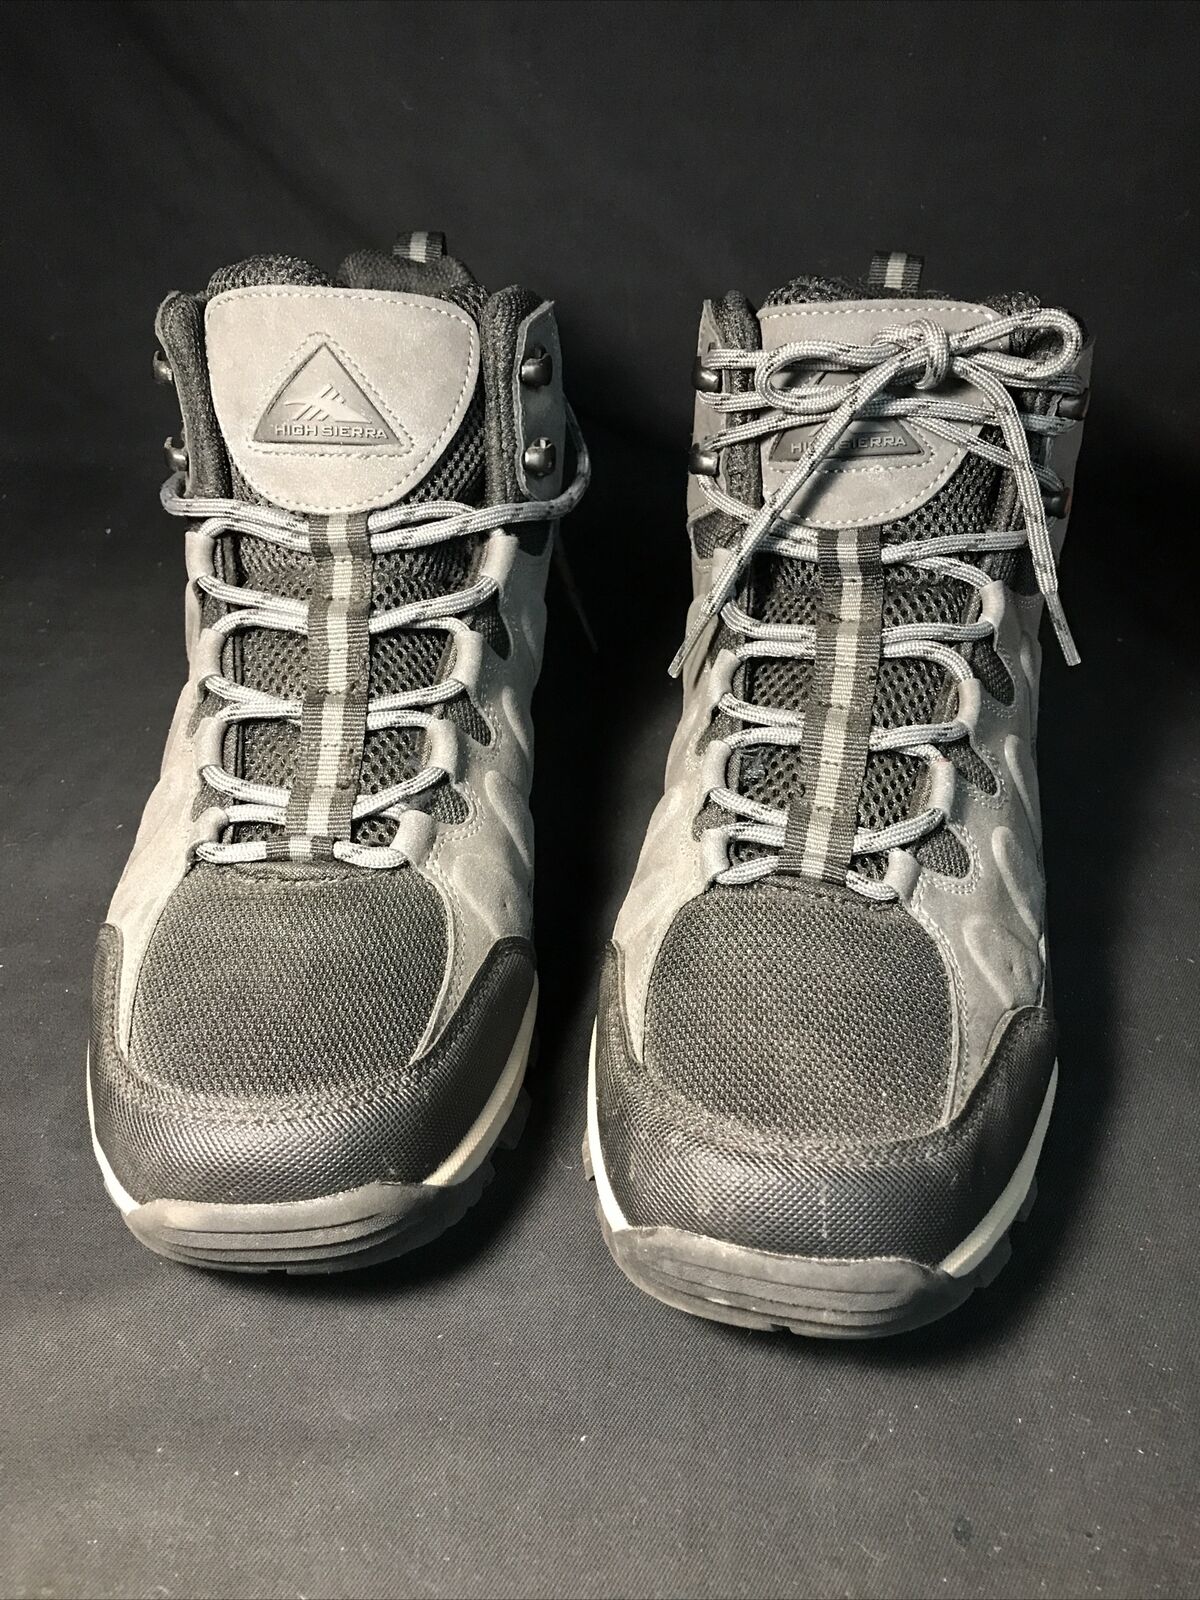 High Sierra Gray Hiking Trekking Mesh Boots Men’s Size 11.5 (EUC)